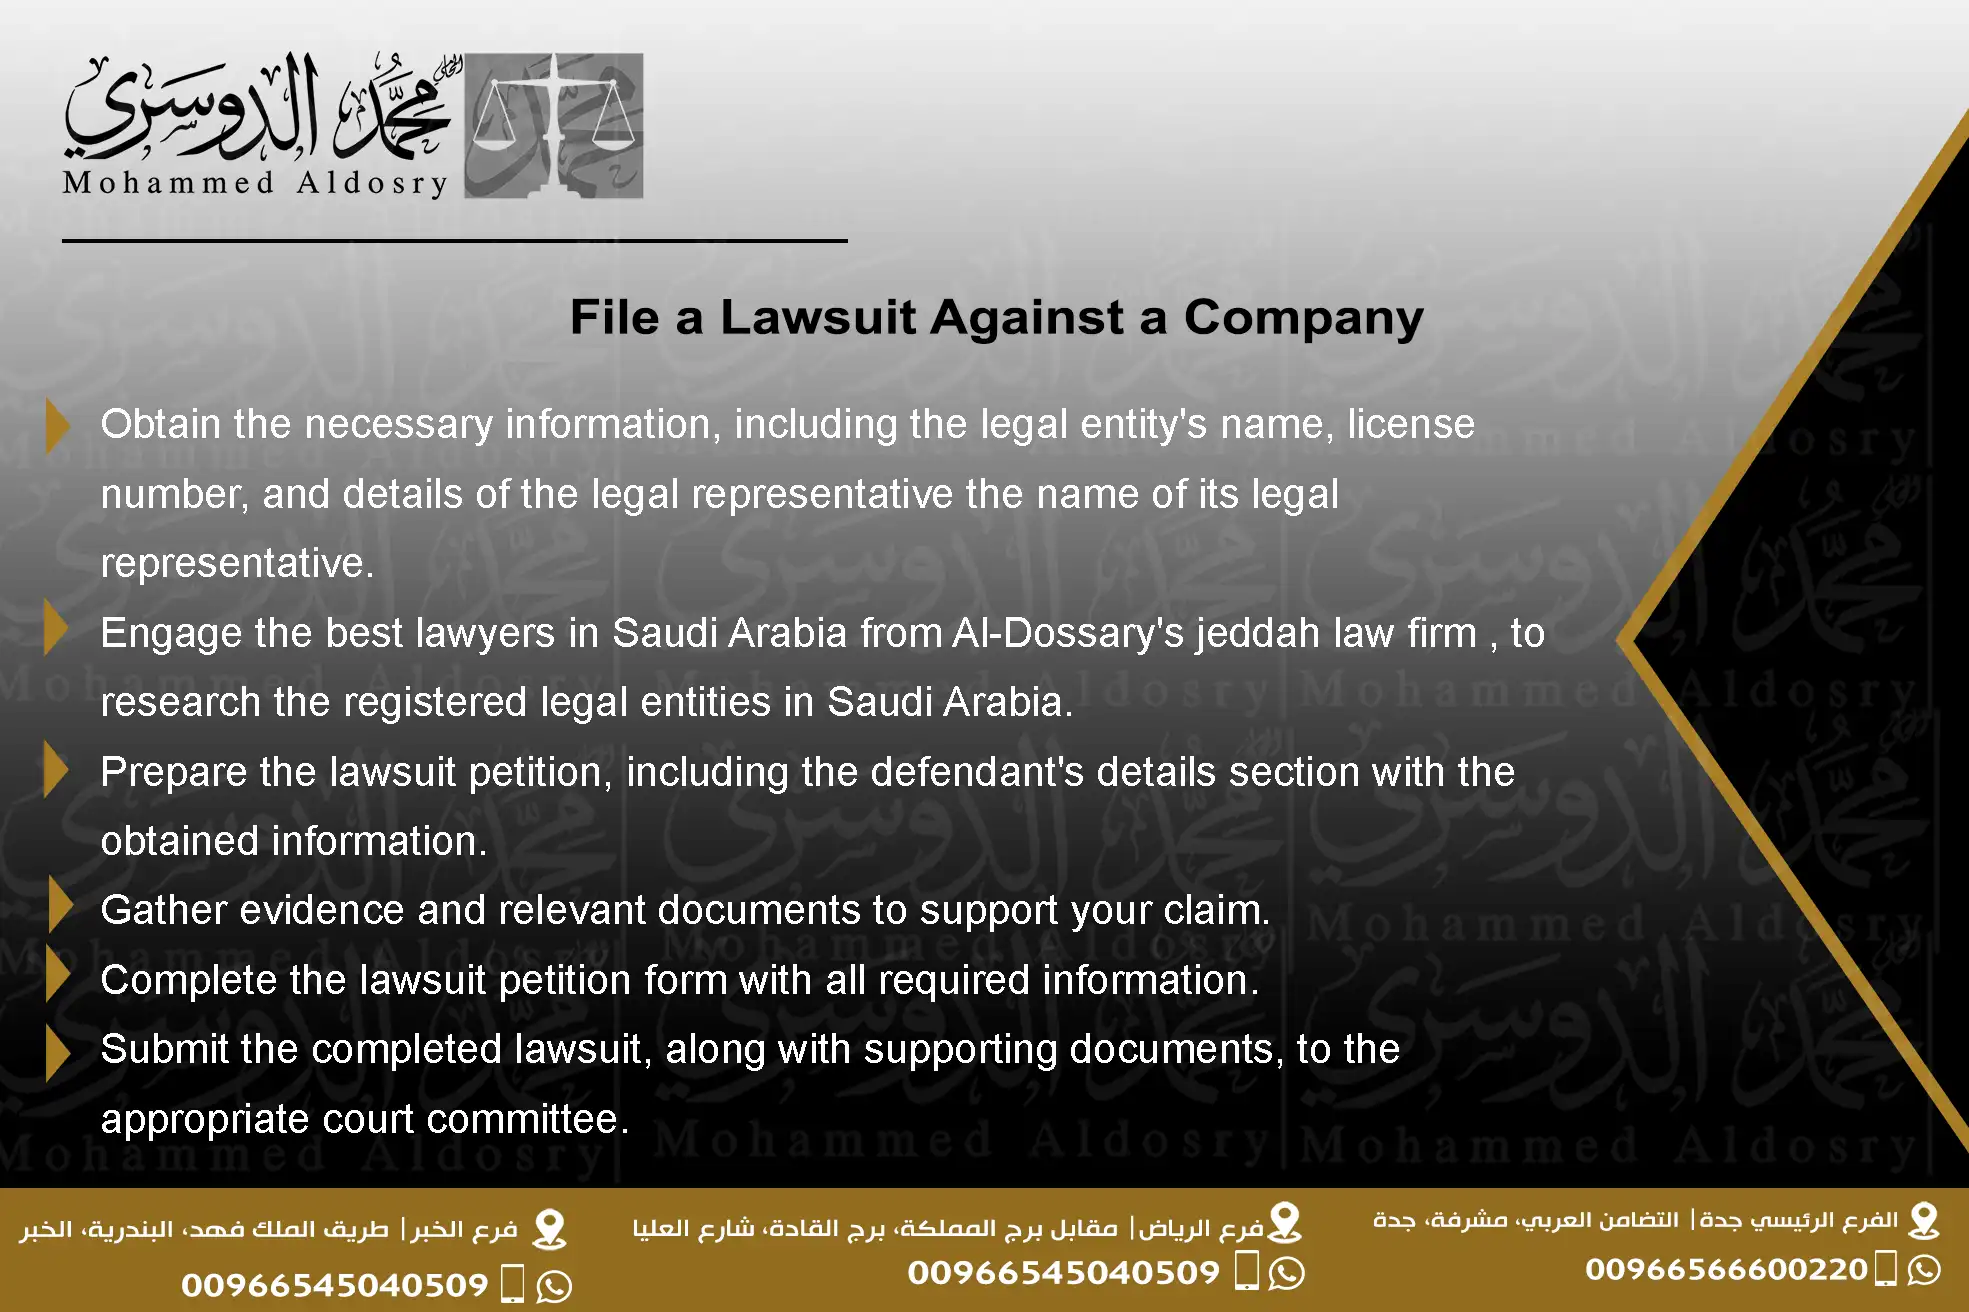 File a Lawsuit Against a Company